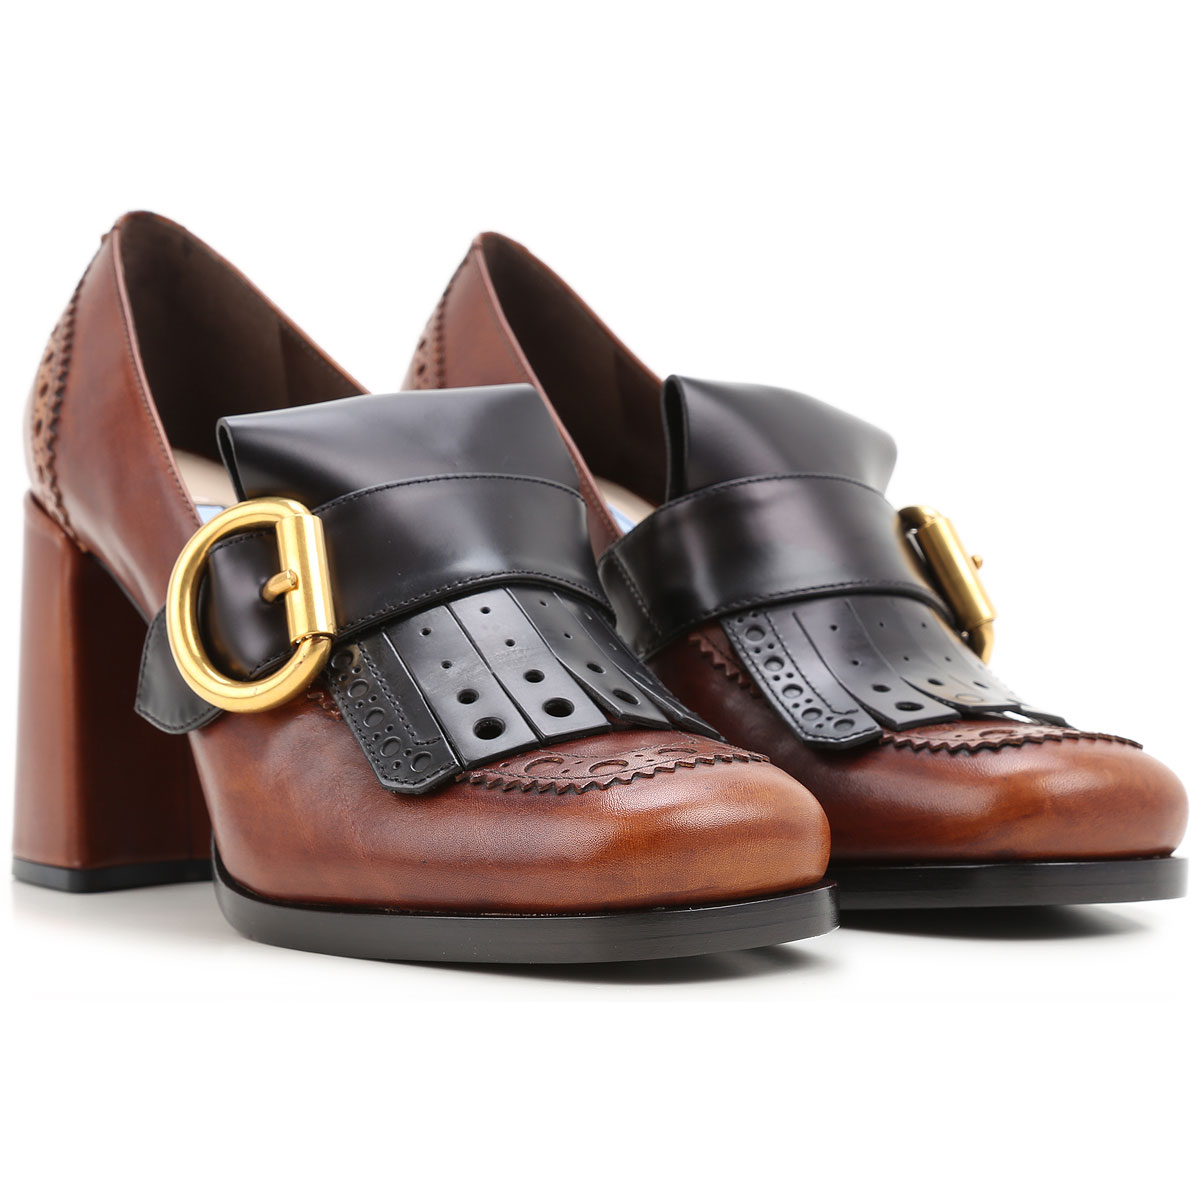 Womens Shoes Prada, Style code: 1d122h-3h90-f0038